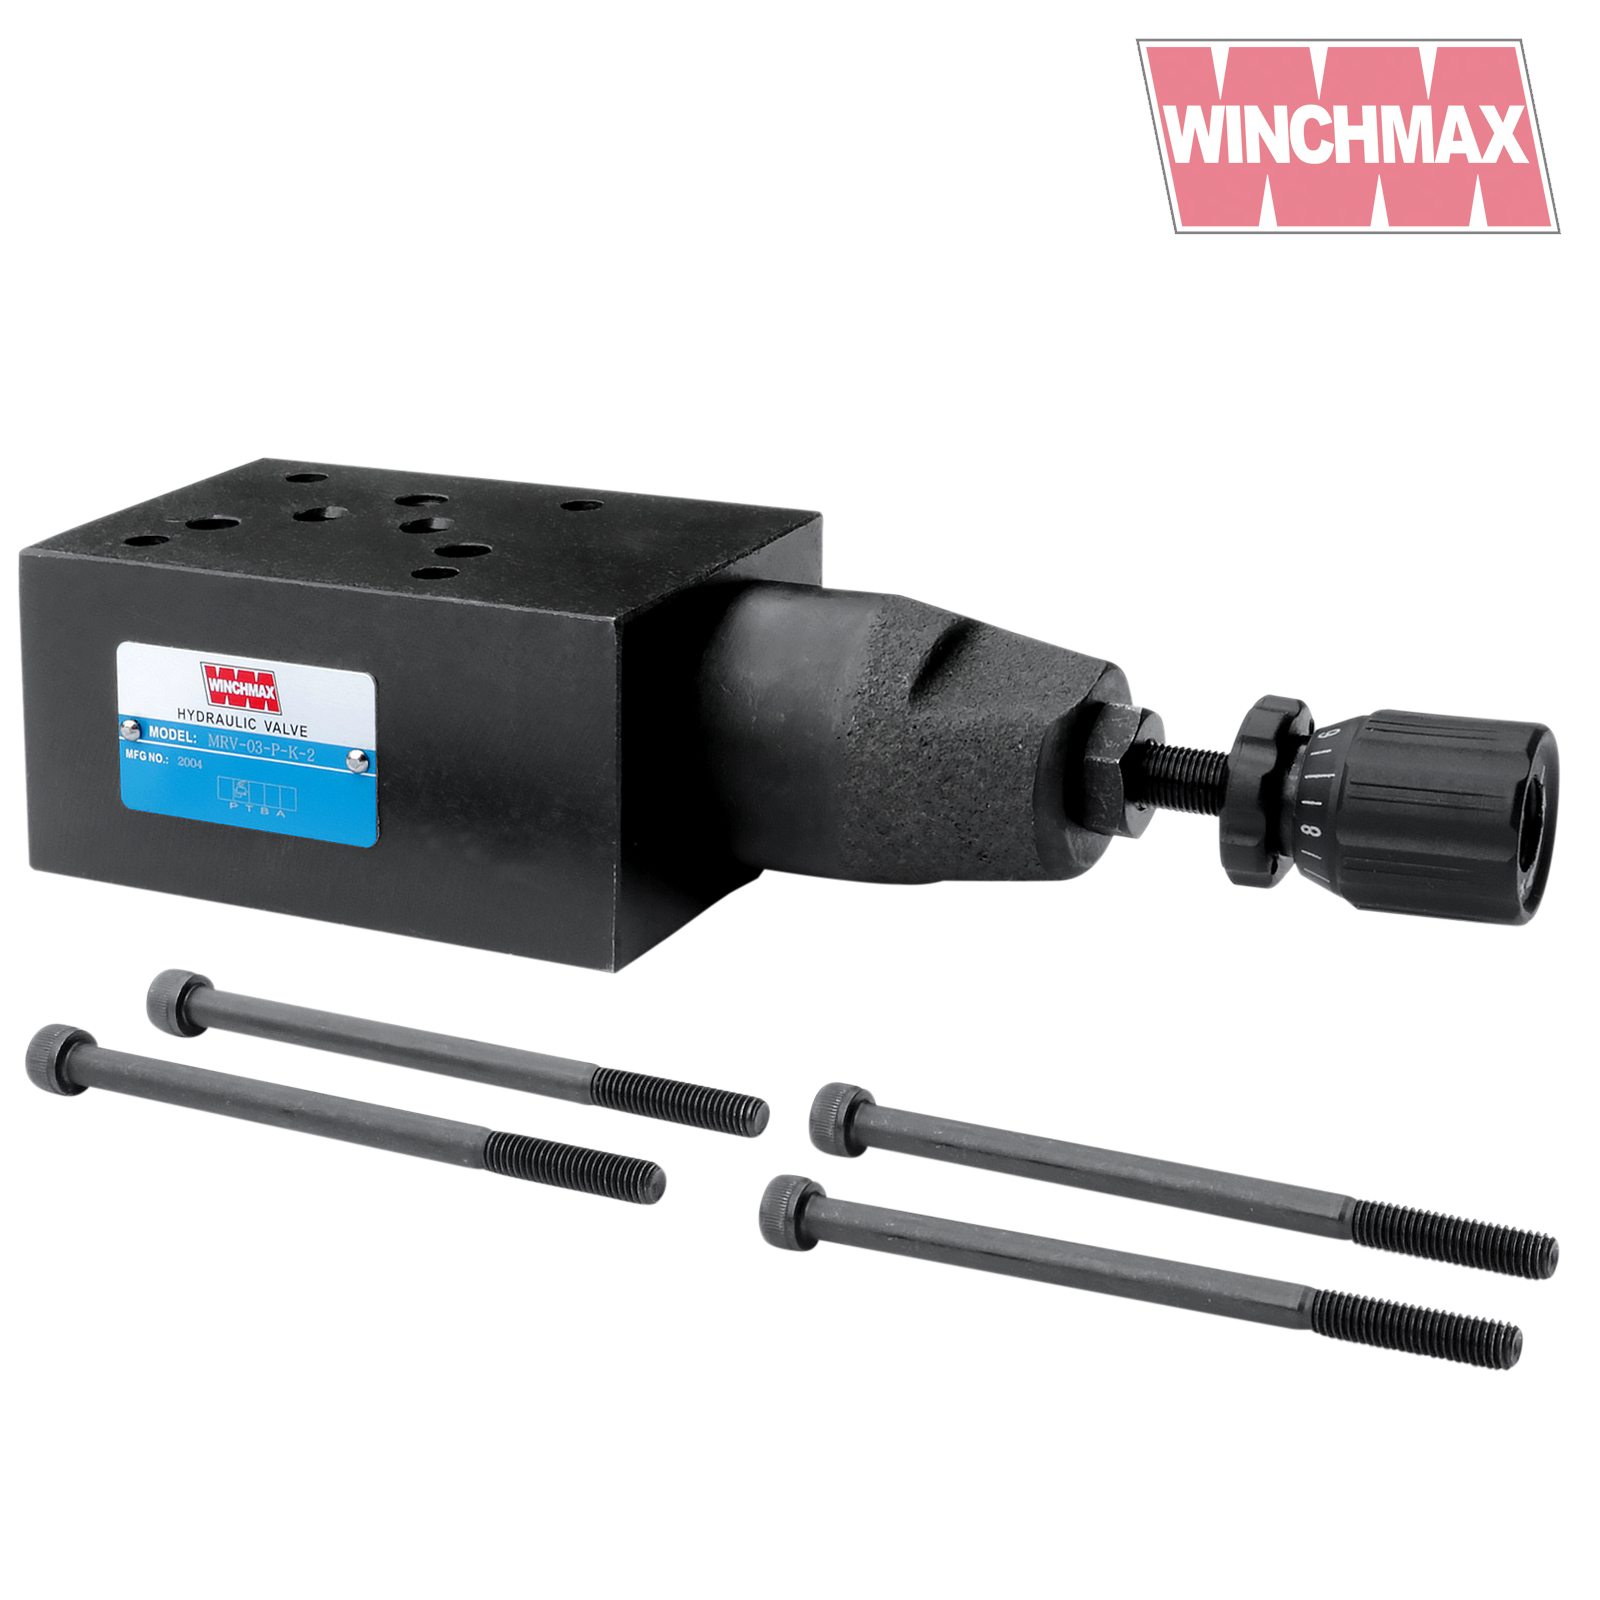 WINCHMAX CETOP5 Hydraulic Regulator Valve